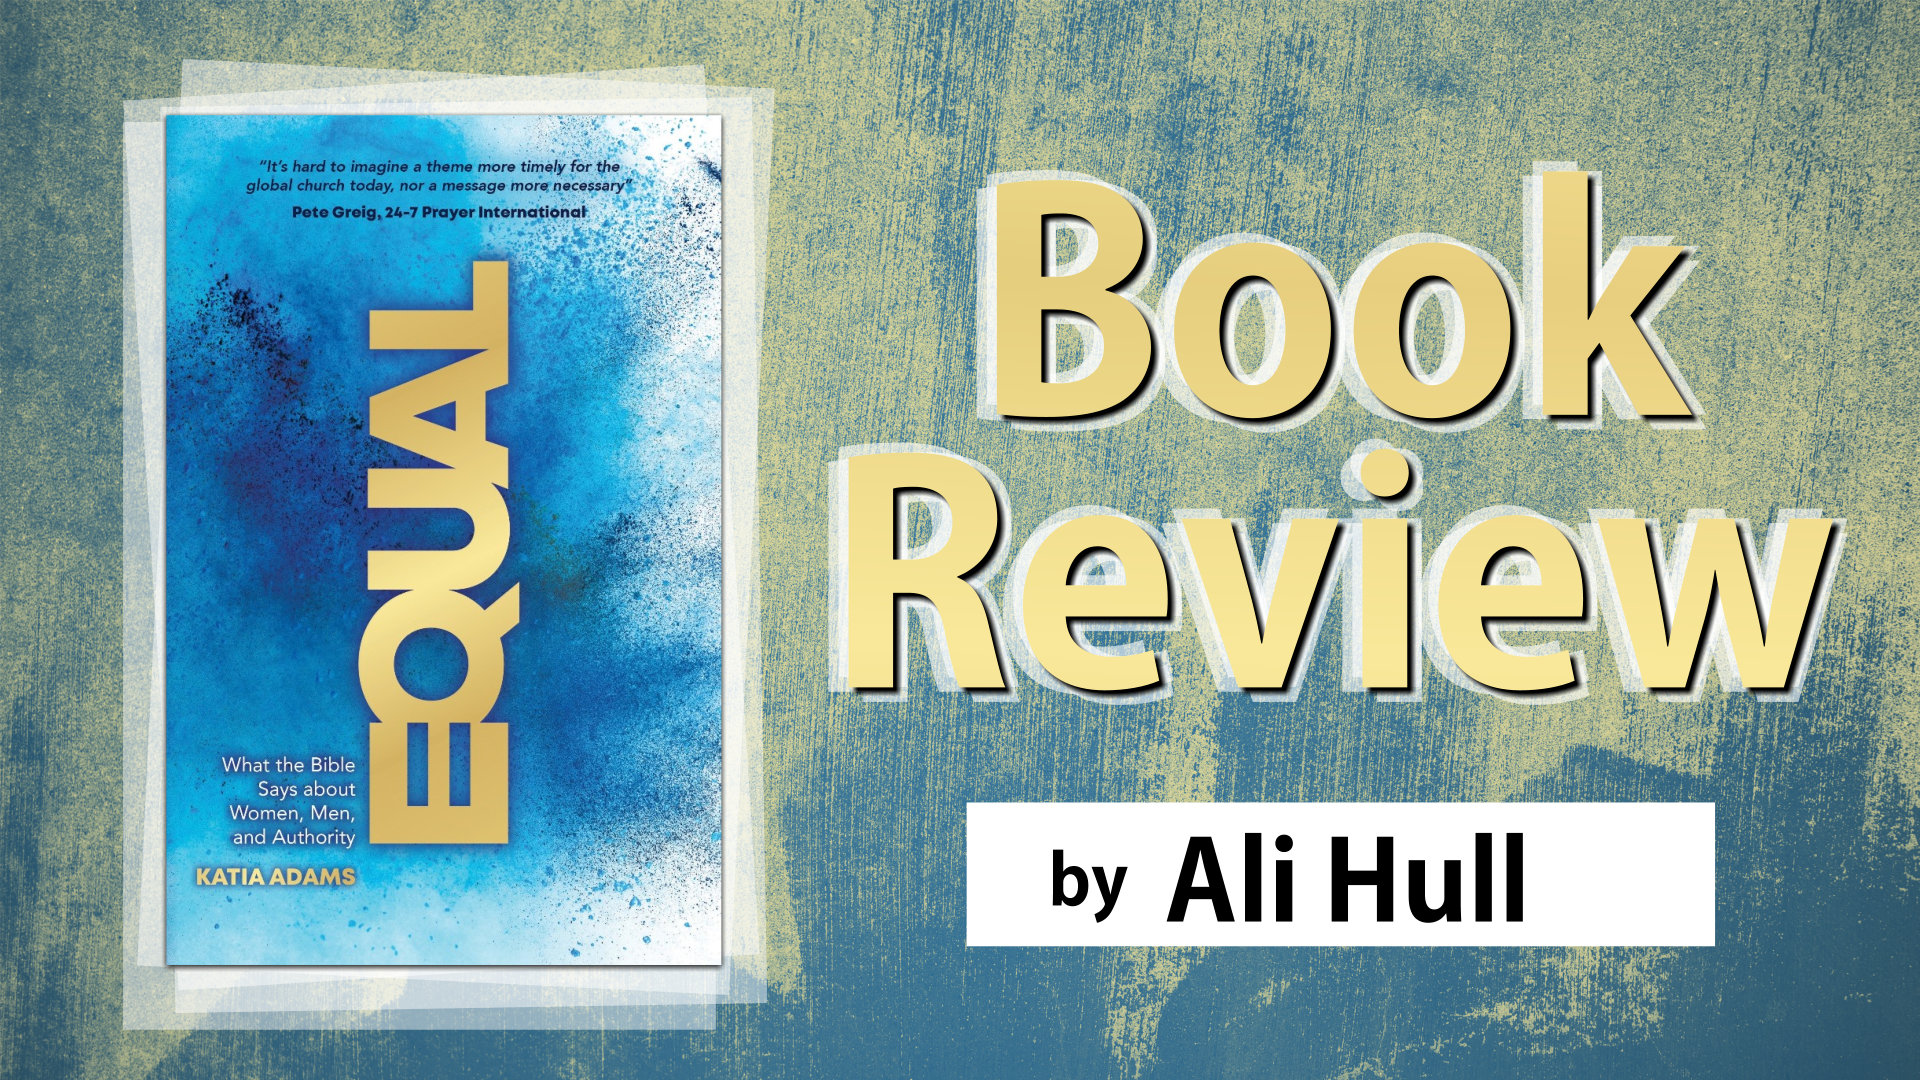 Equal by Katia Adams | A book review by Ali Hull